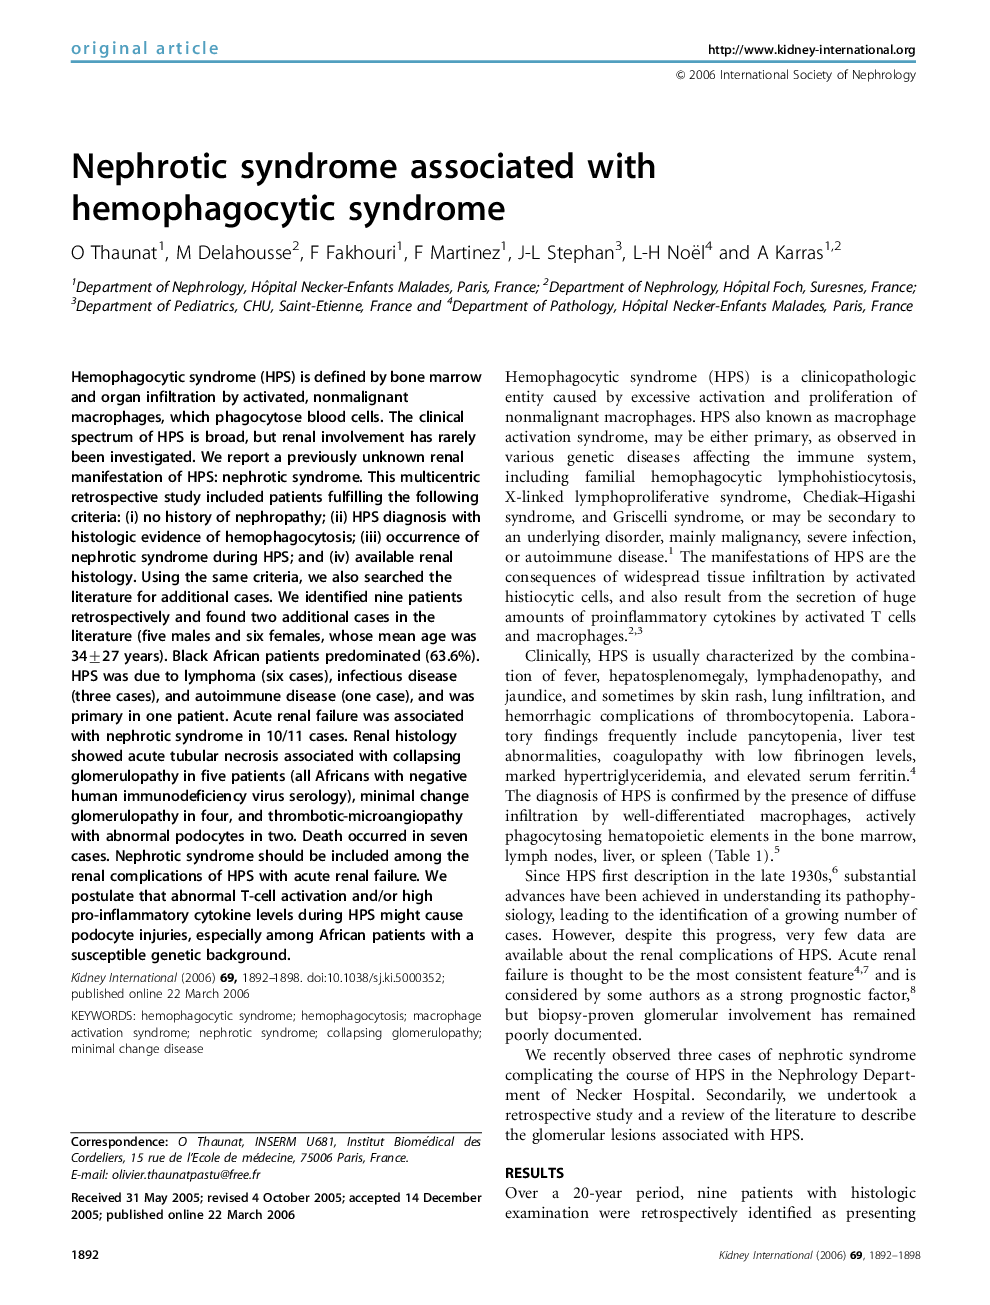 Nephrotic syndrome associated with hemophagocytic syndrome